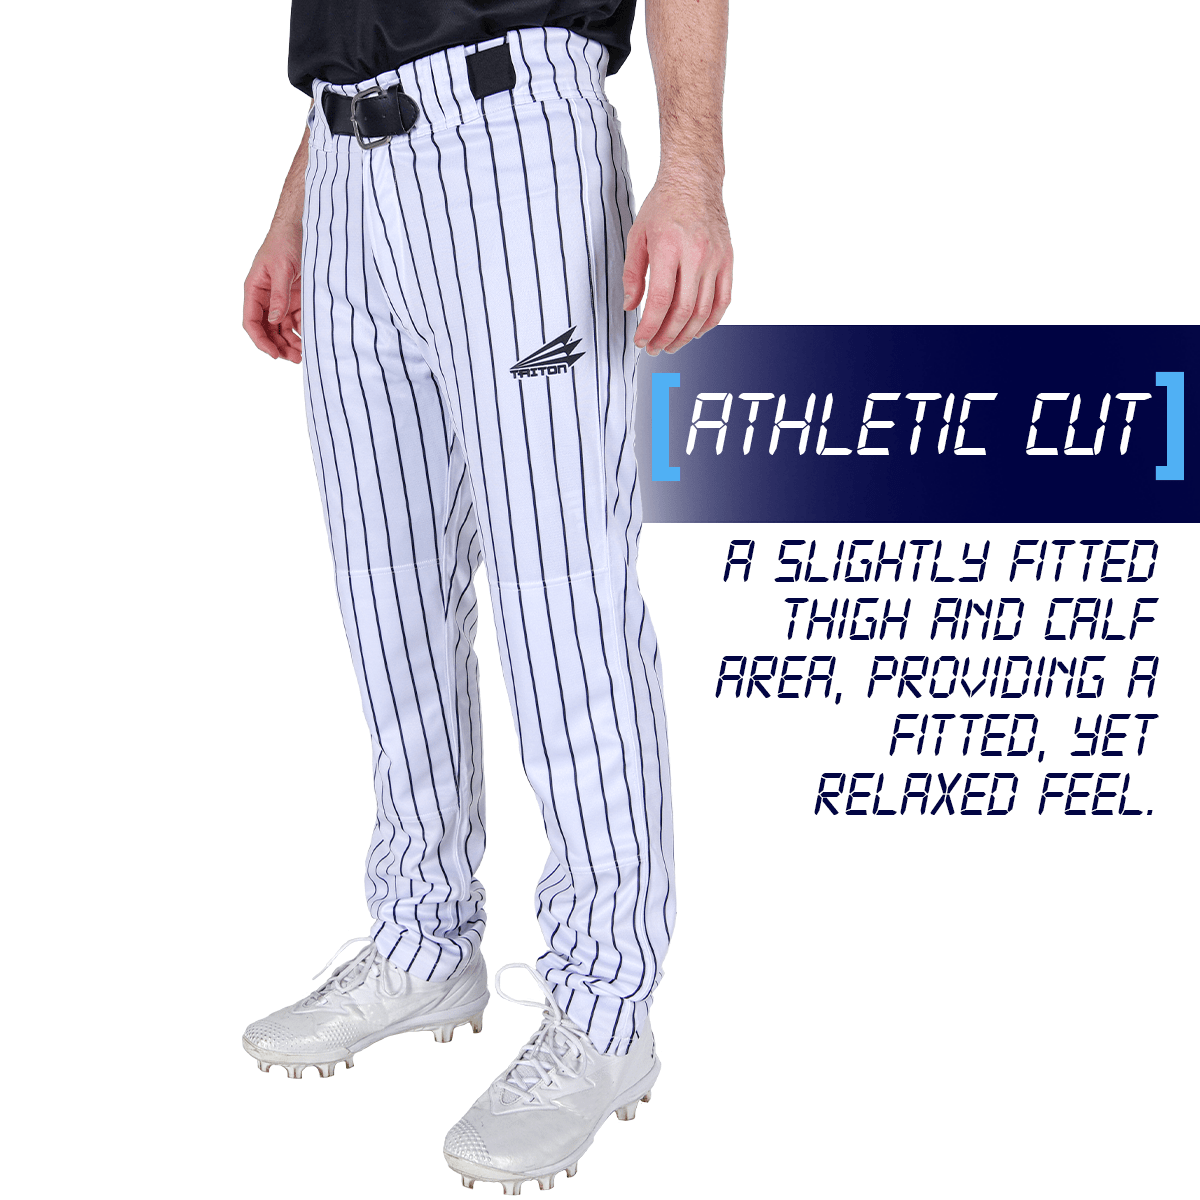 Triton Elite Athletic Cut Tapered Baseball Pant (Pinstripe)